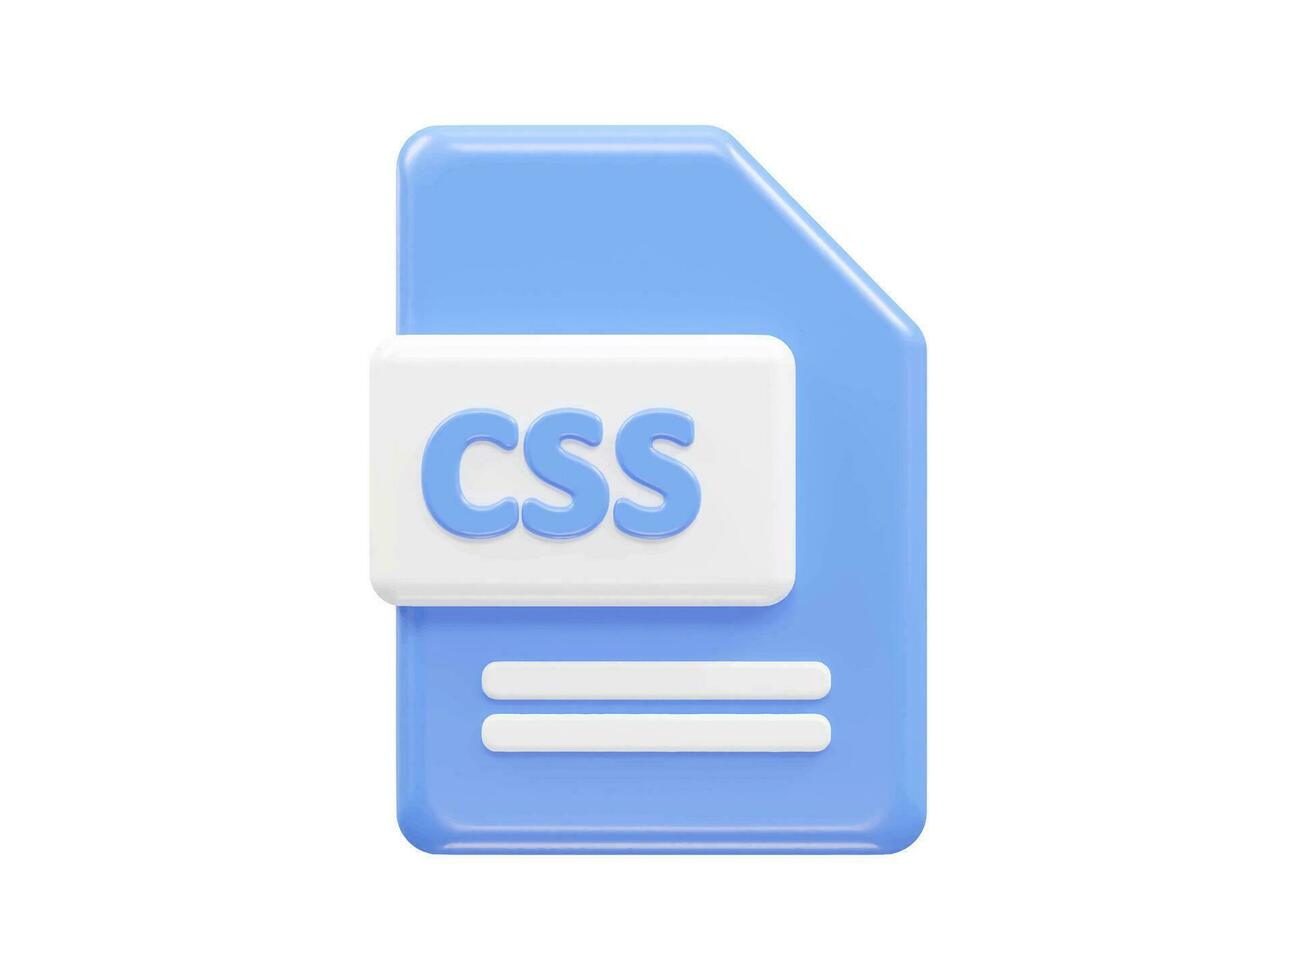 Css file format folder vector 3d